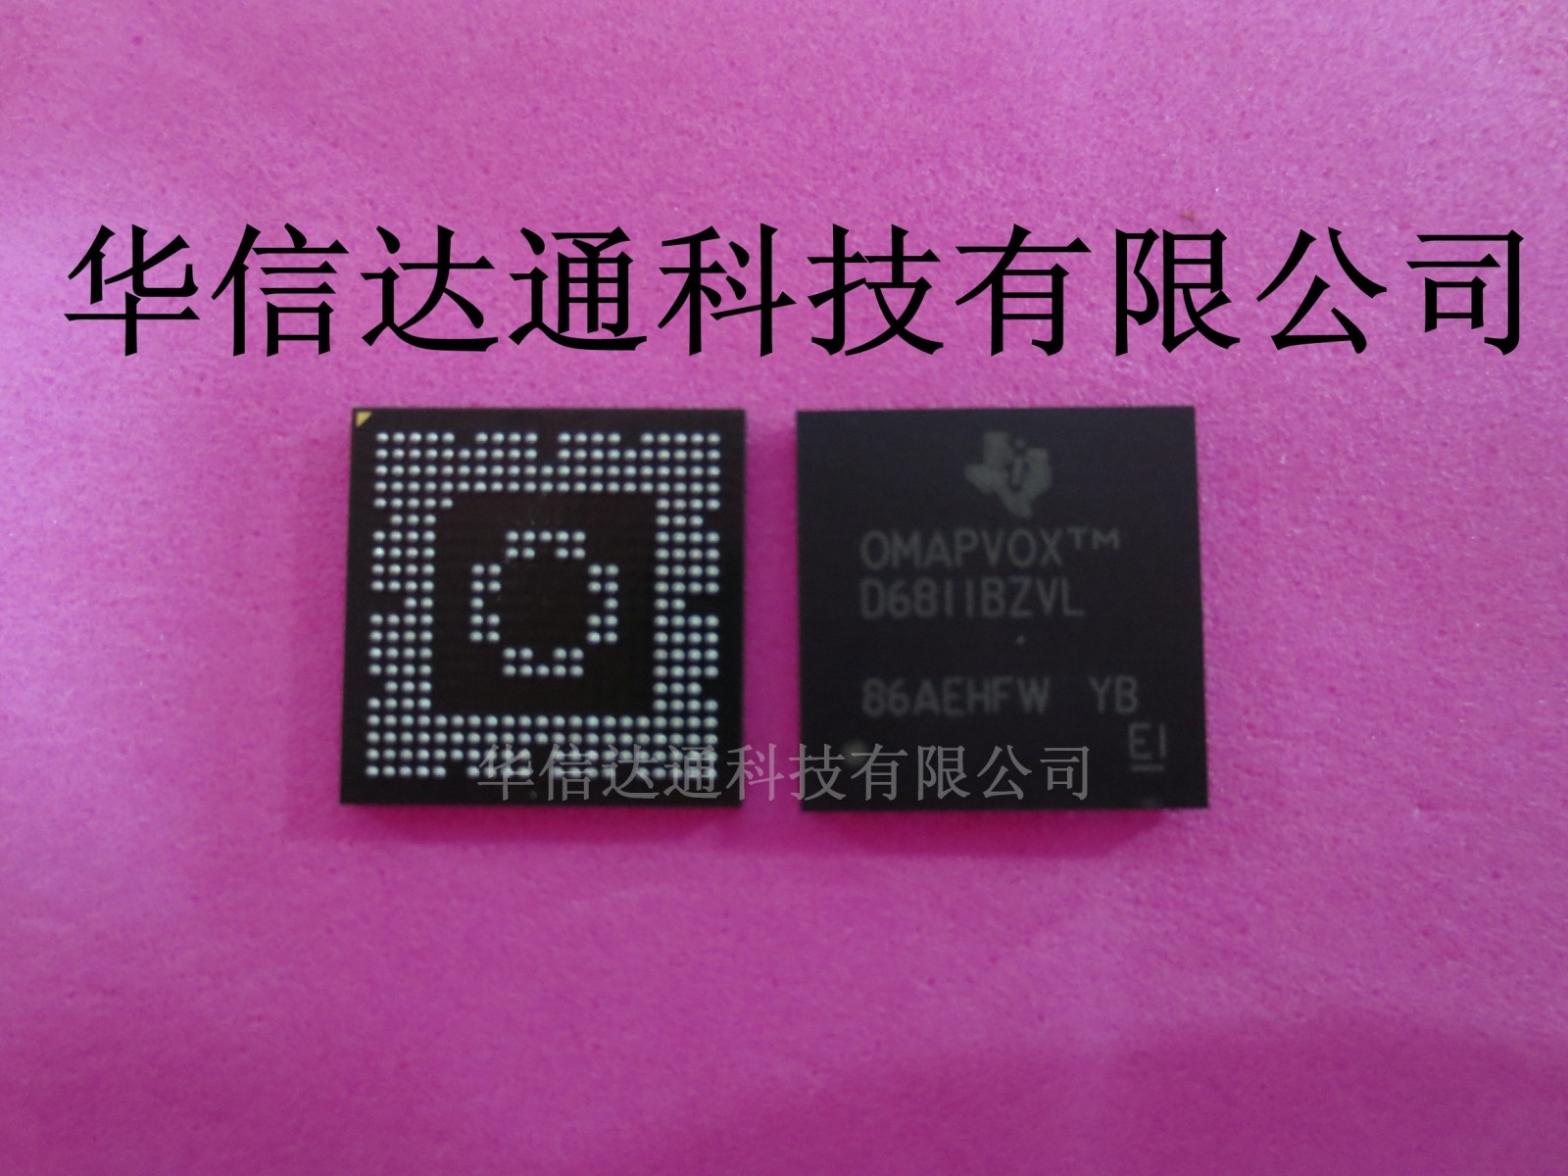  VICKO OMAPVOX D6811BZVL smartphone CPU CPU chip